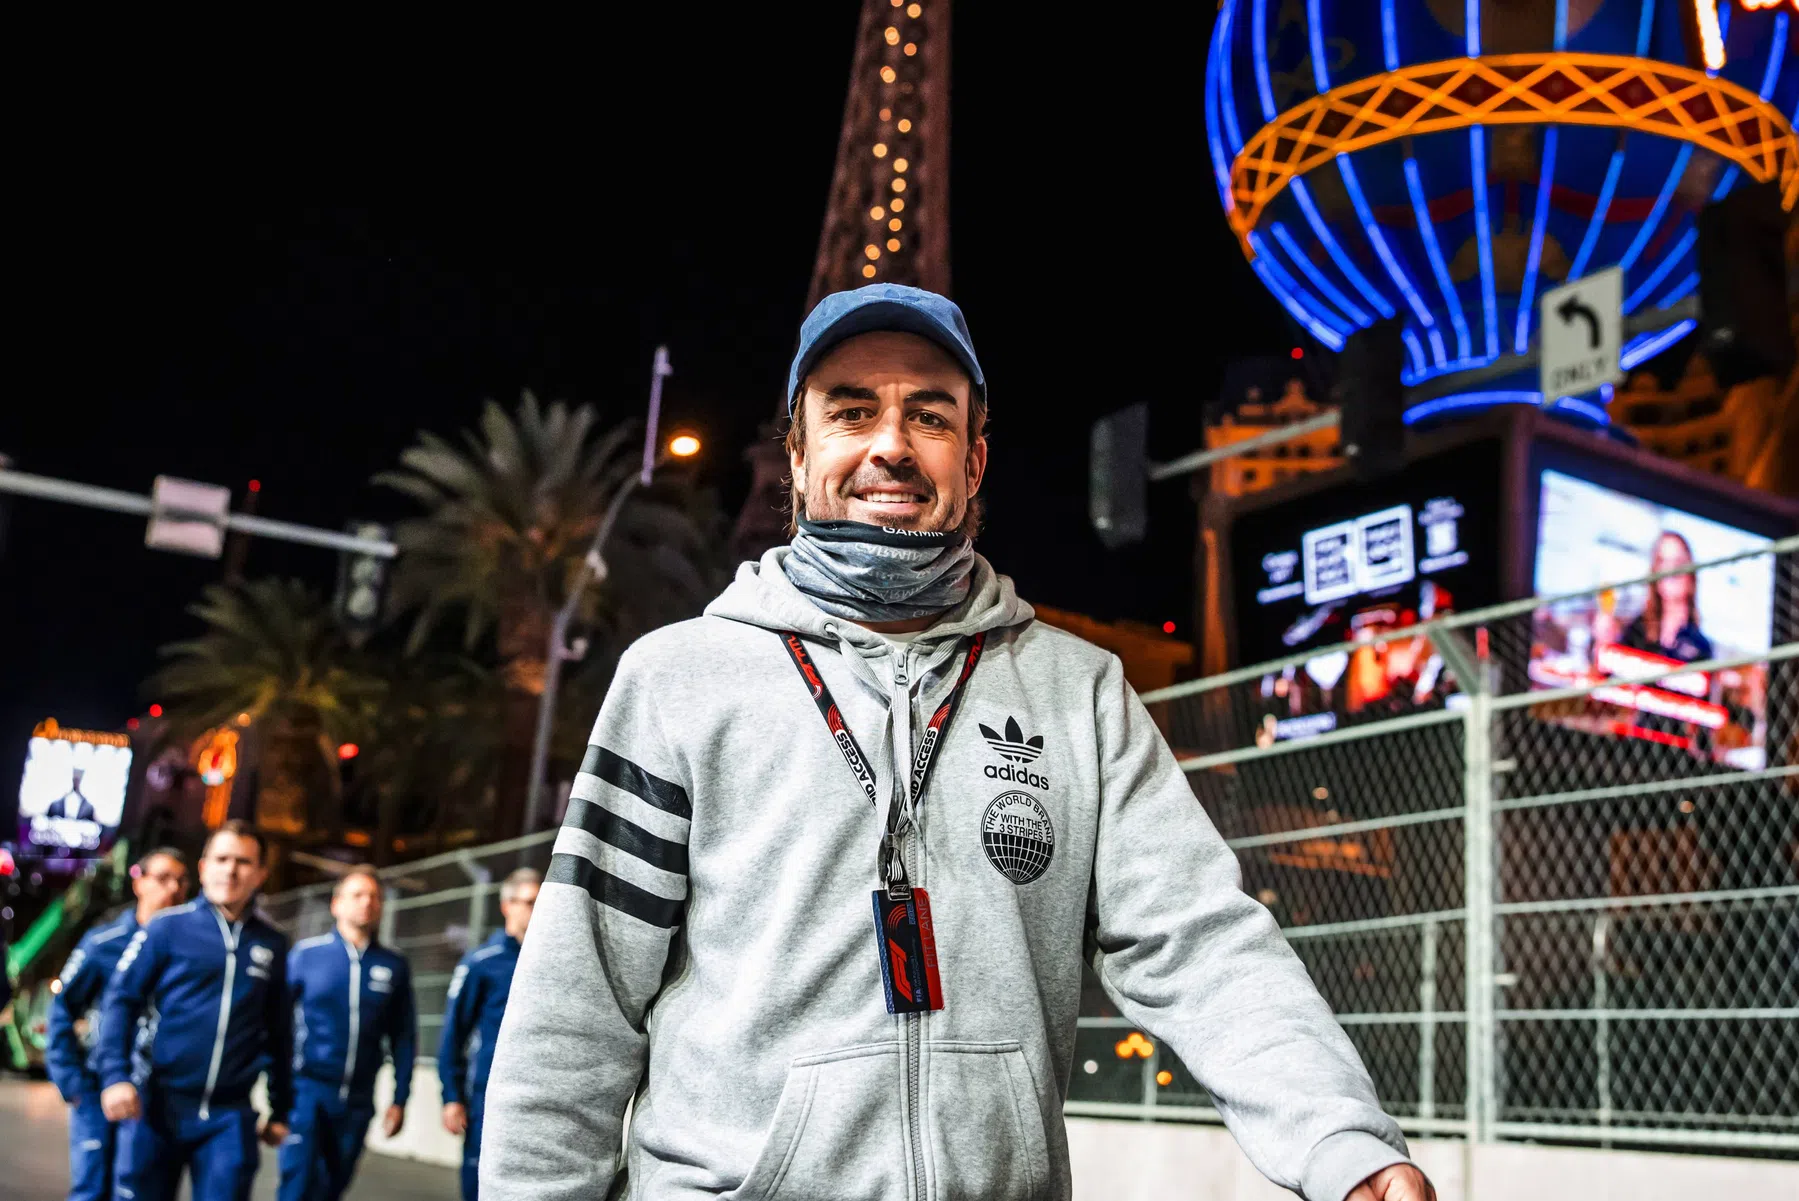 Alonso awaits temperatures in Las Vegas